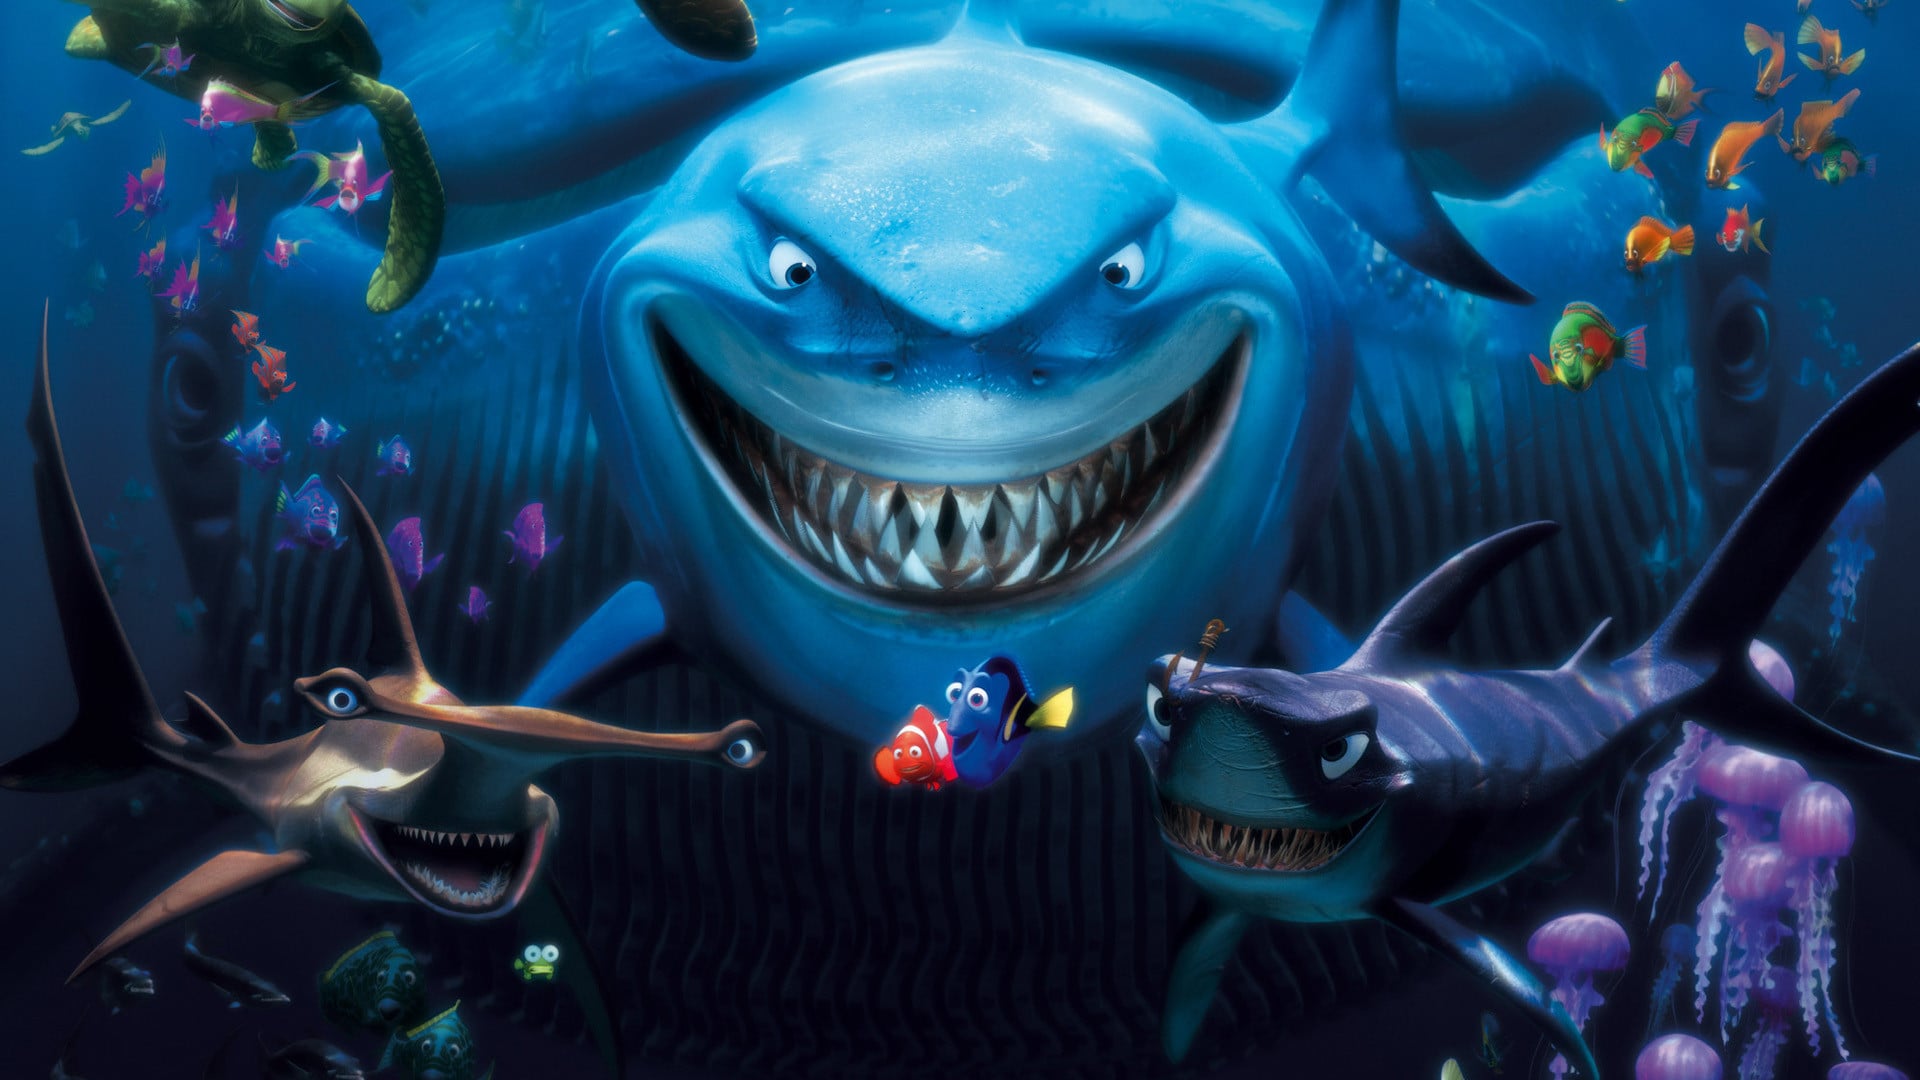 Finding Nemo นีโม...ปลาเล็ก หัวใจโต๊...โต (2003)